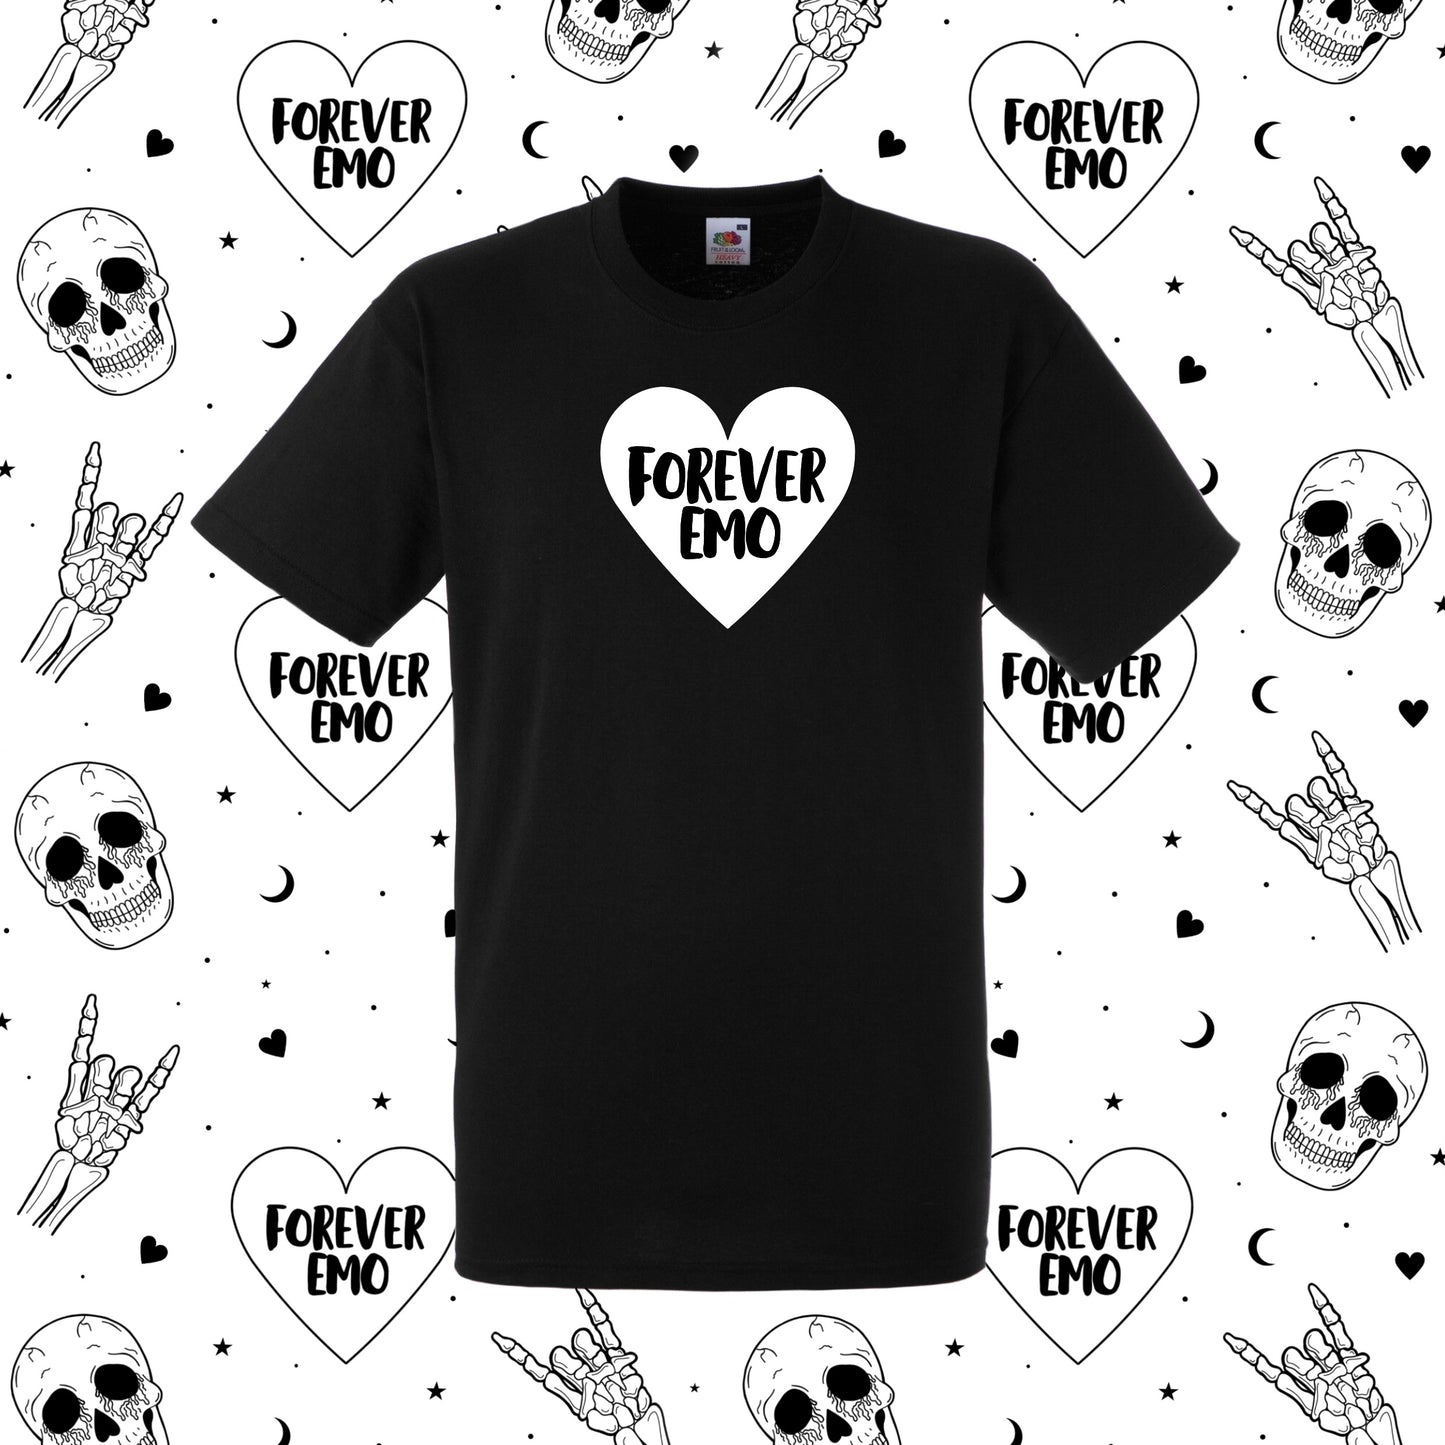 Forever Emo T-shirt